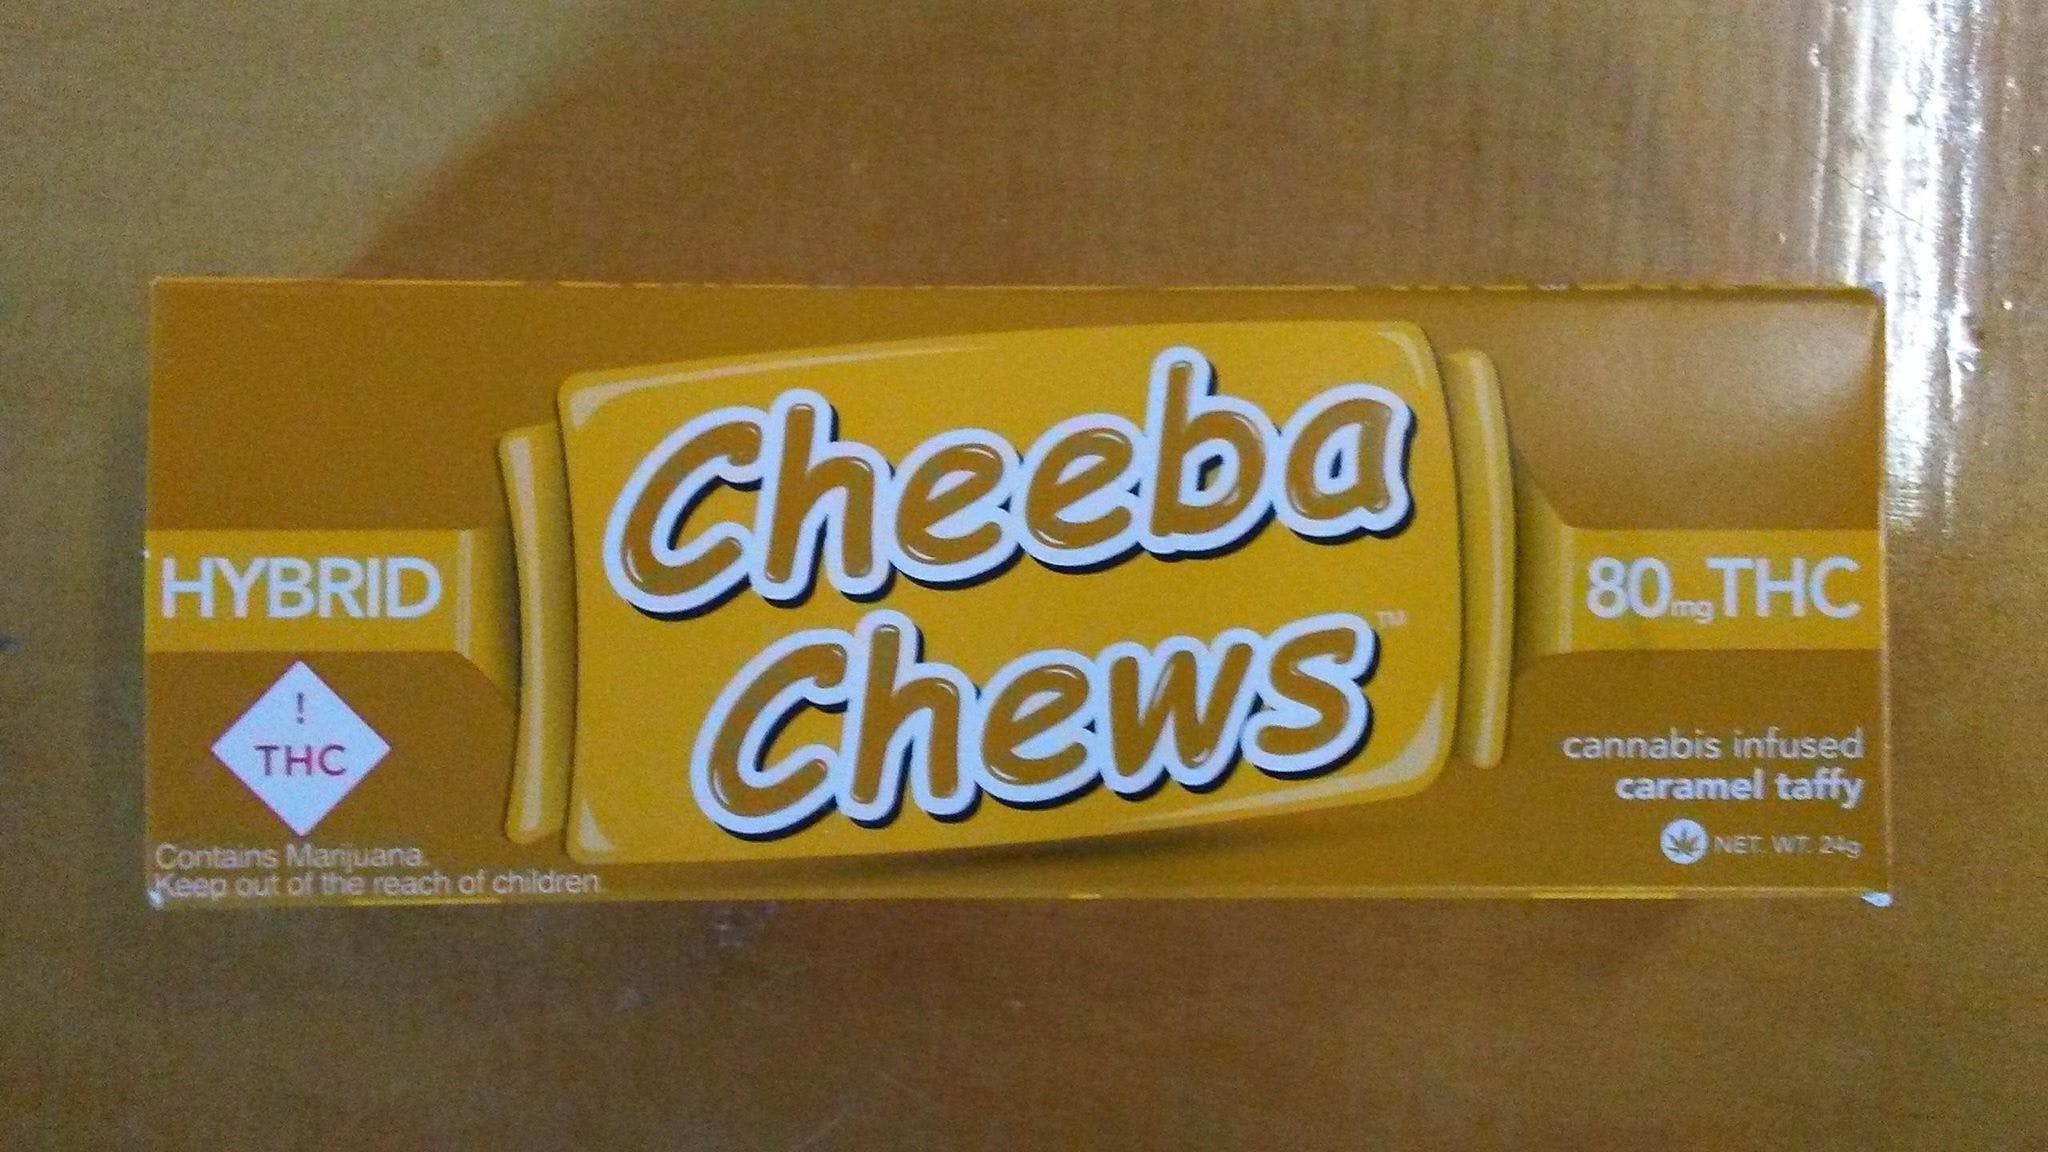 Cheeba Chews - Hybrid Caramel Taffy